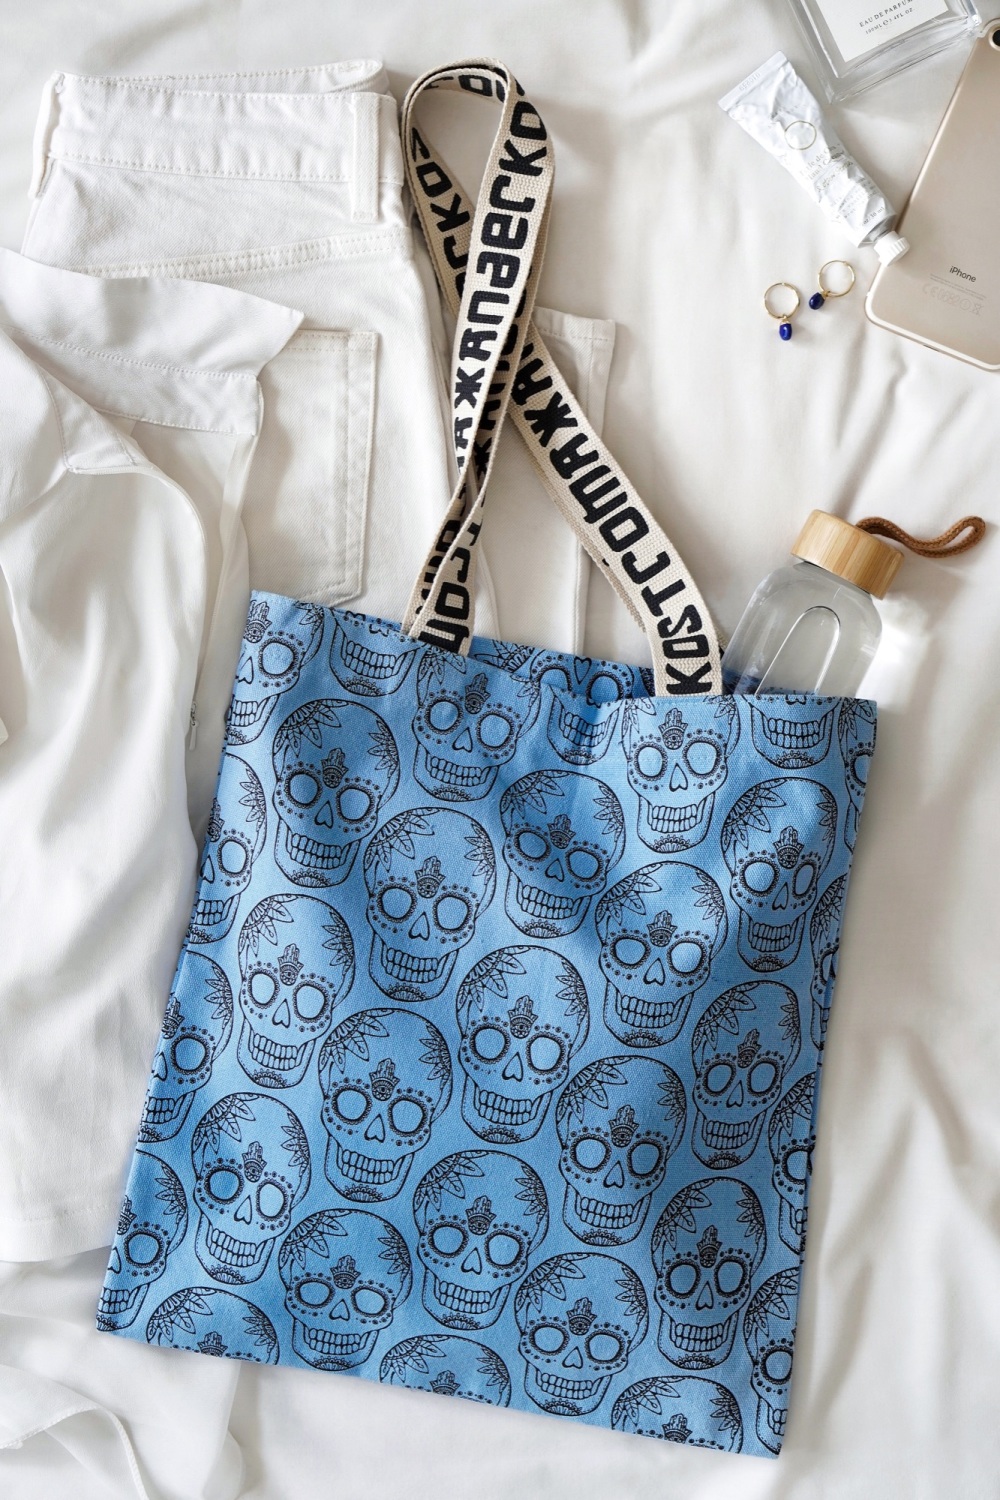 Cashmere Blue Skull Print Cotton Shopper Tote Bag by Xander Kostroma